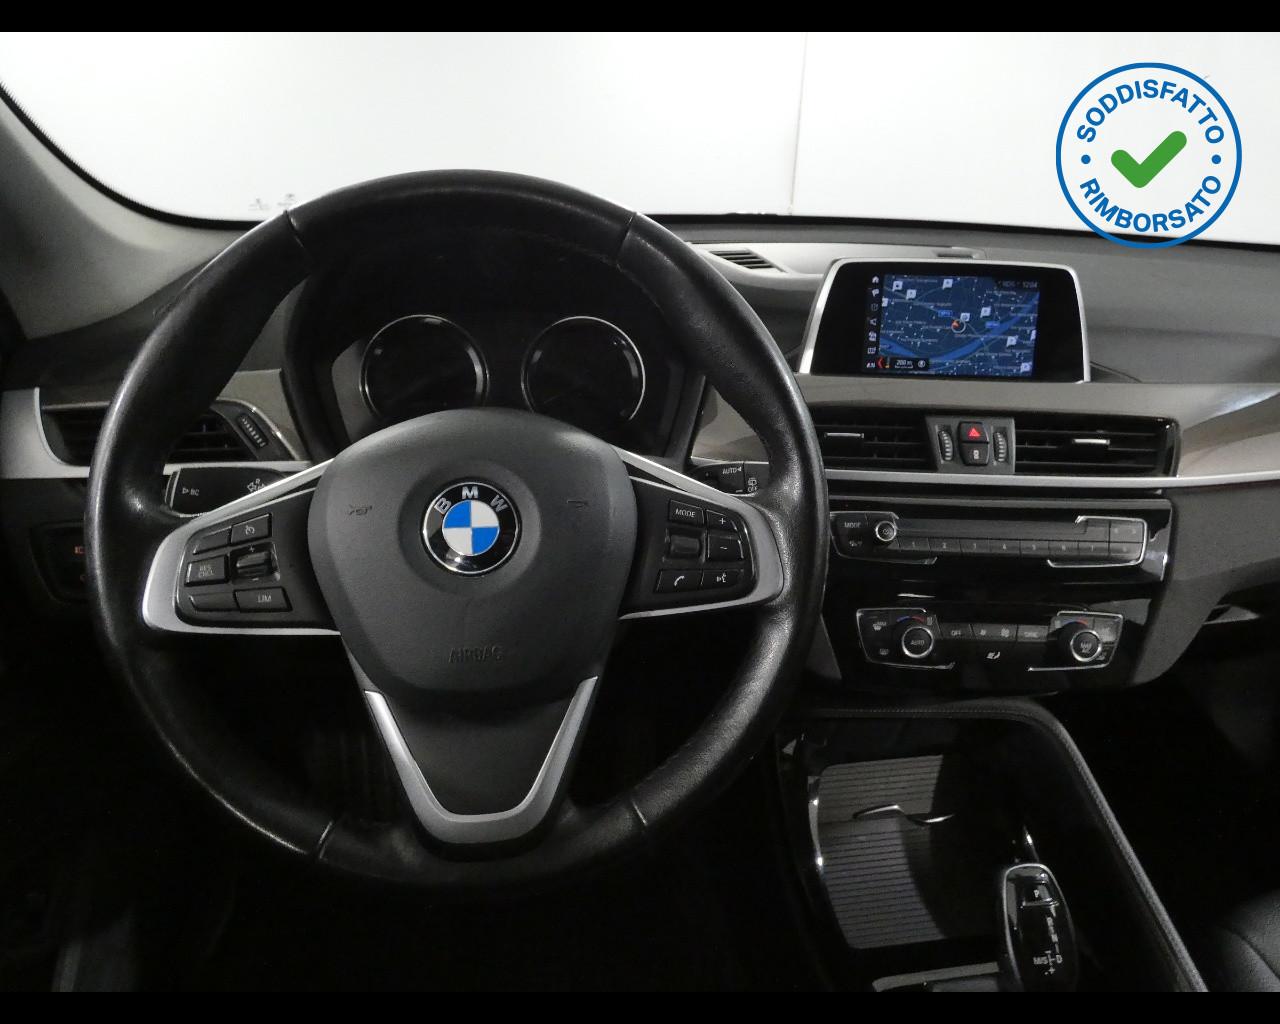 BMW X1 (F48) X1 sDrive18d xLine